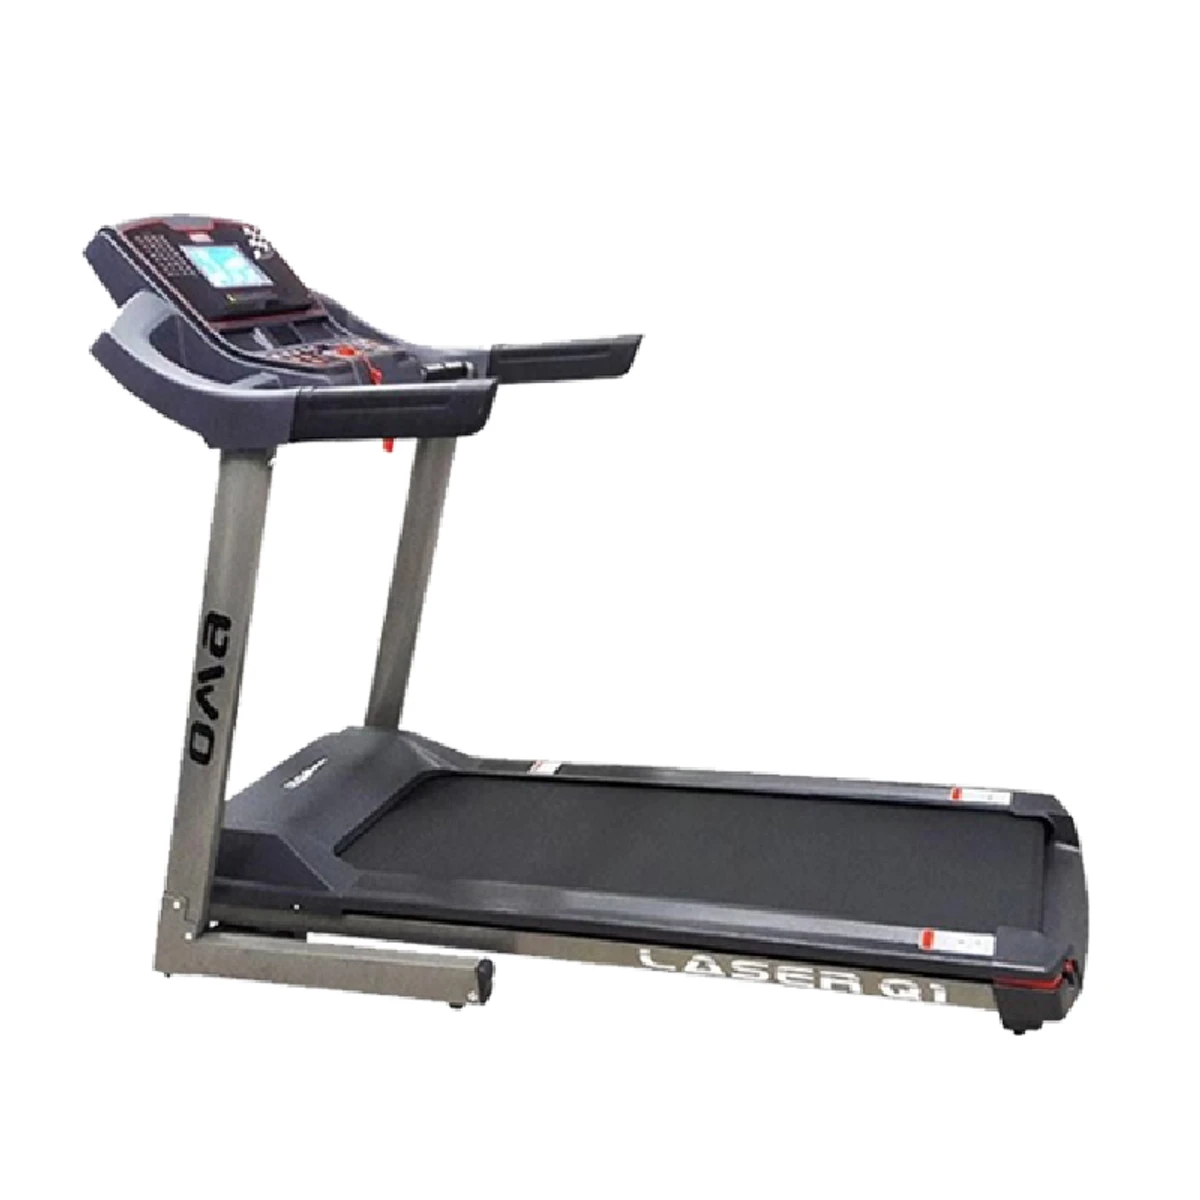 OMA – 5921CA – Electric Motorized Treadmill – 2.5 CHP and 4.0 HP Peak